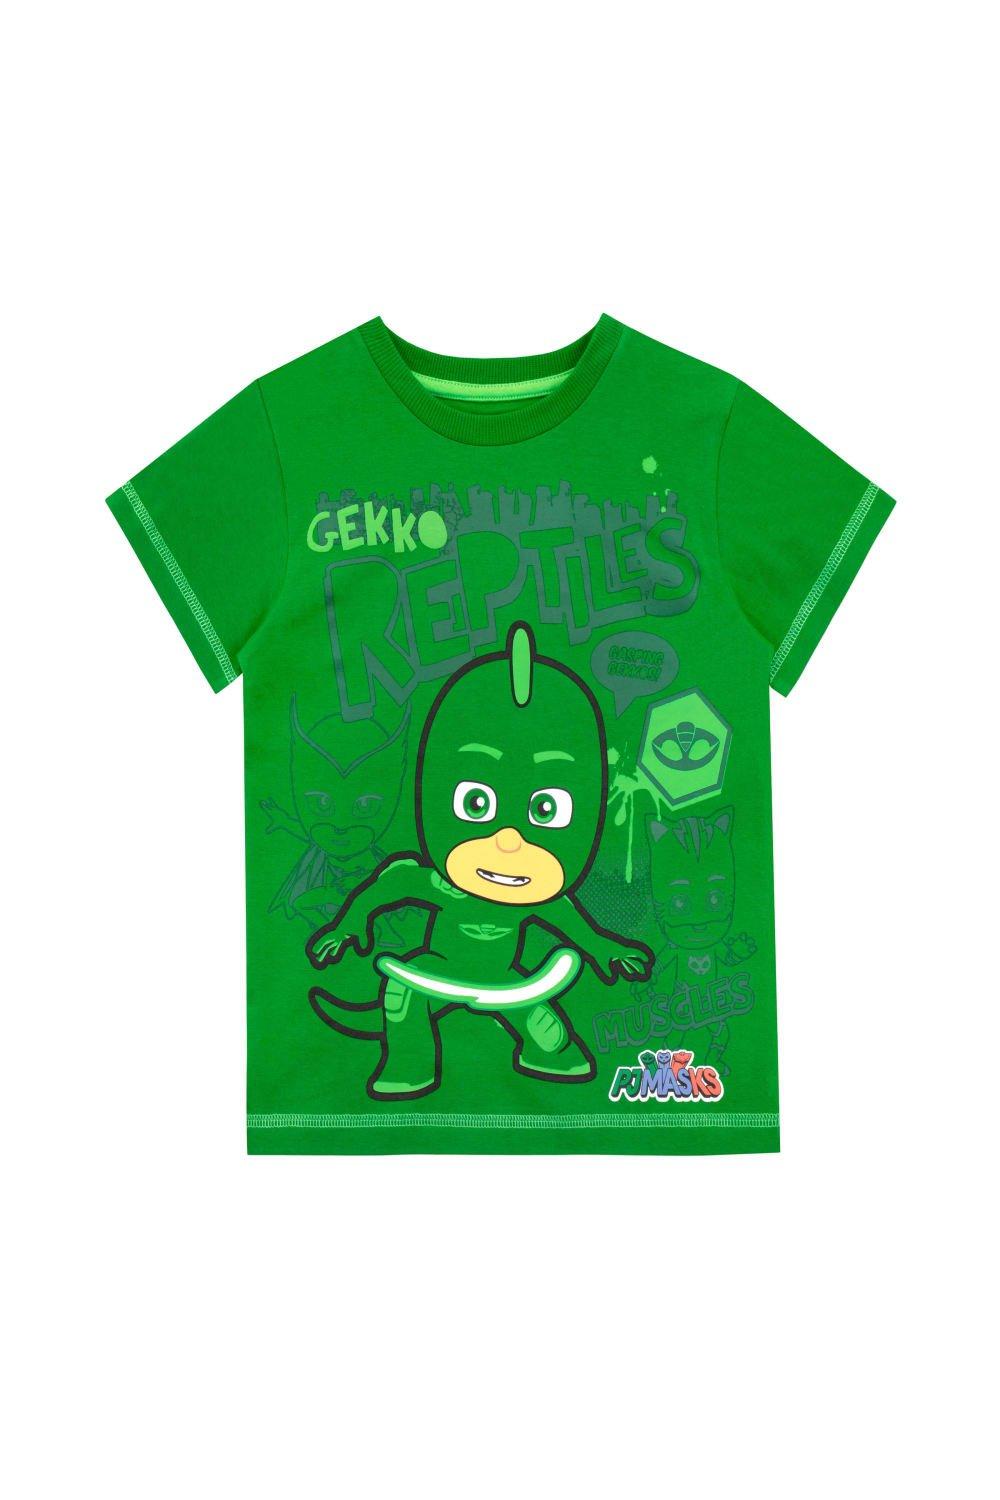 Gekko Catboy And Owlette T-Shirt